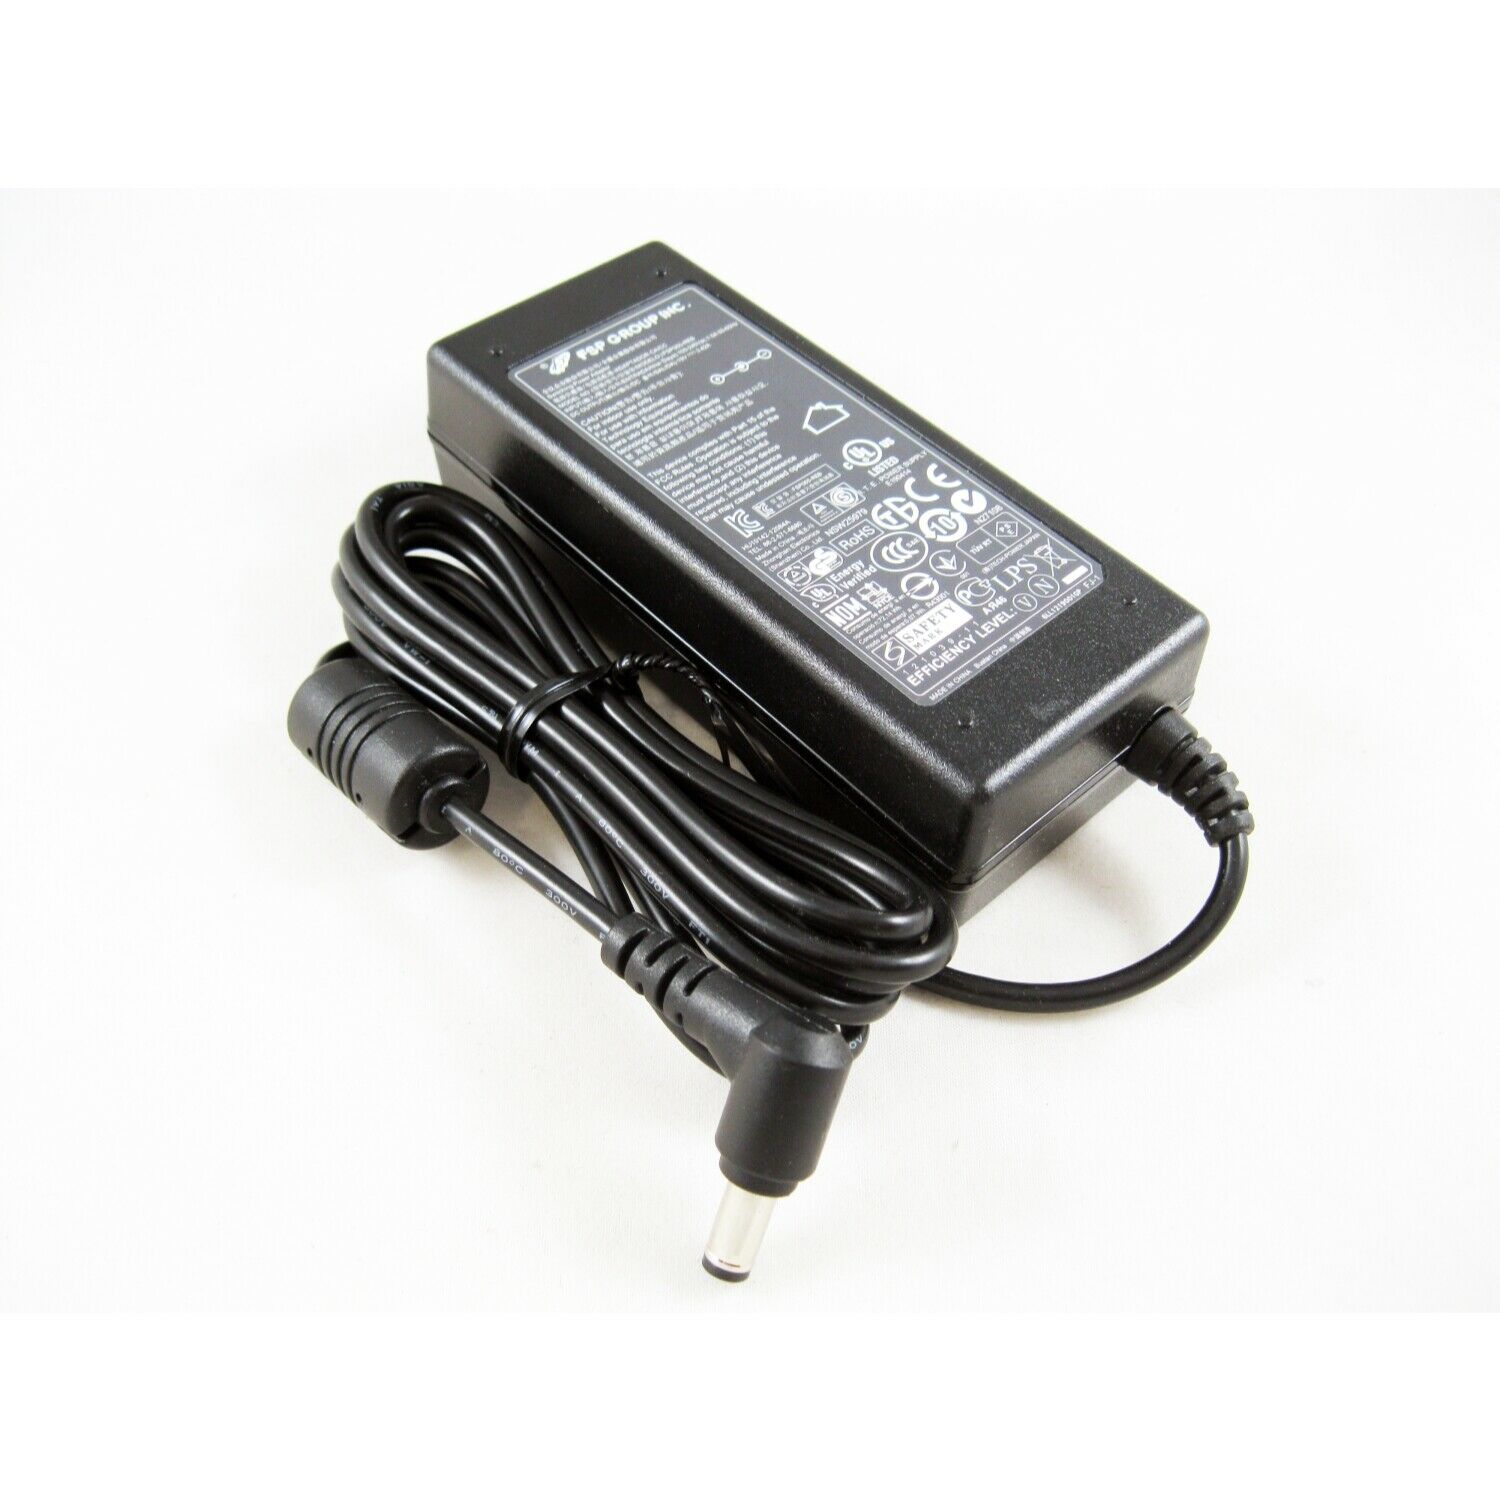 FSP 40022941 FSP065-ASC adaptateur chargeur 19V 3.42A 65W alimentation originale pour MEDION AKOYA E6228, WIM2150 séries